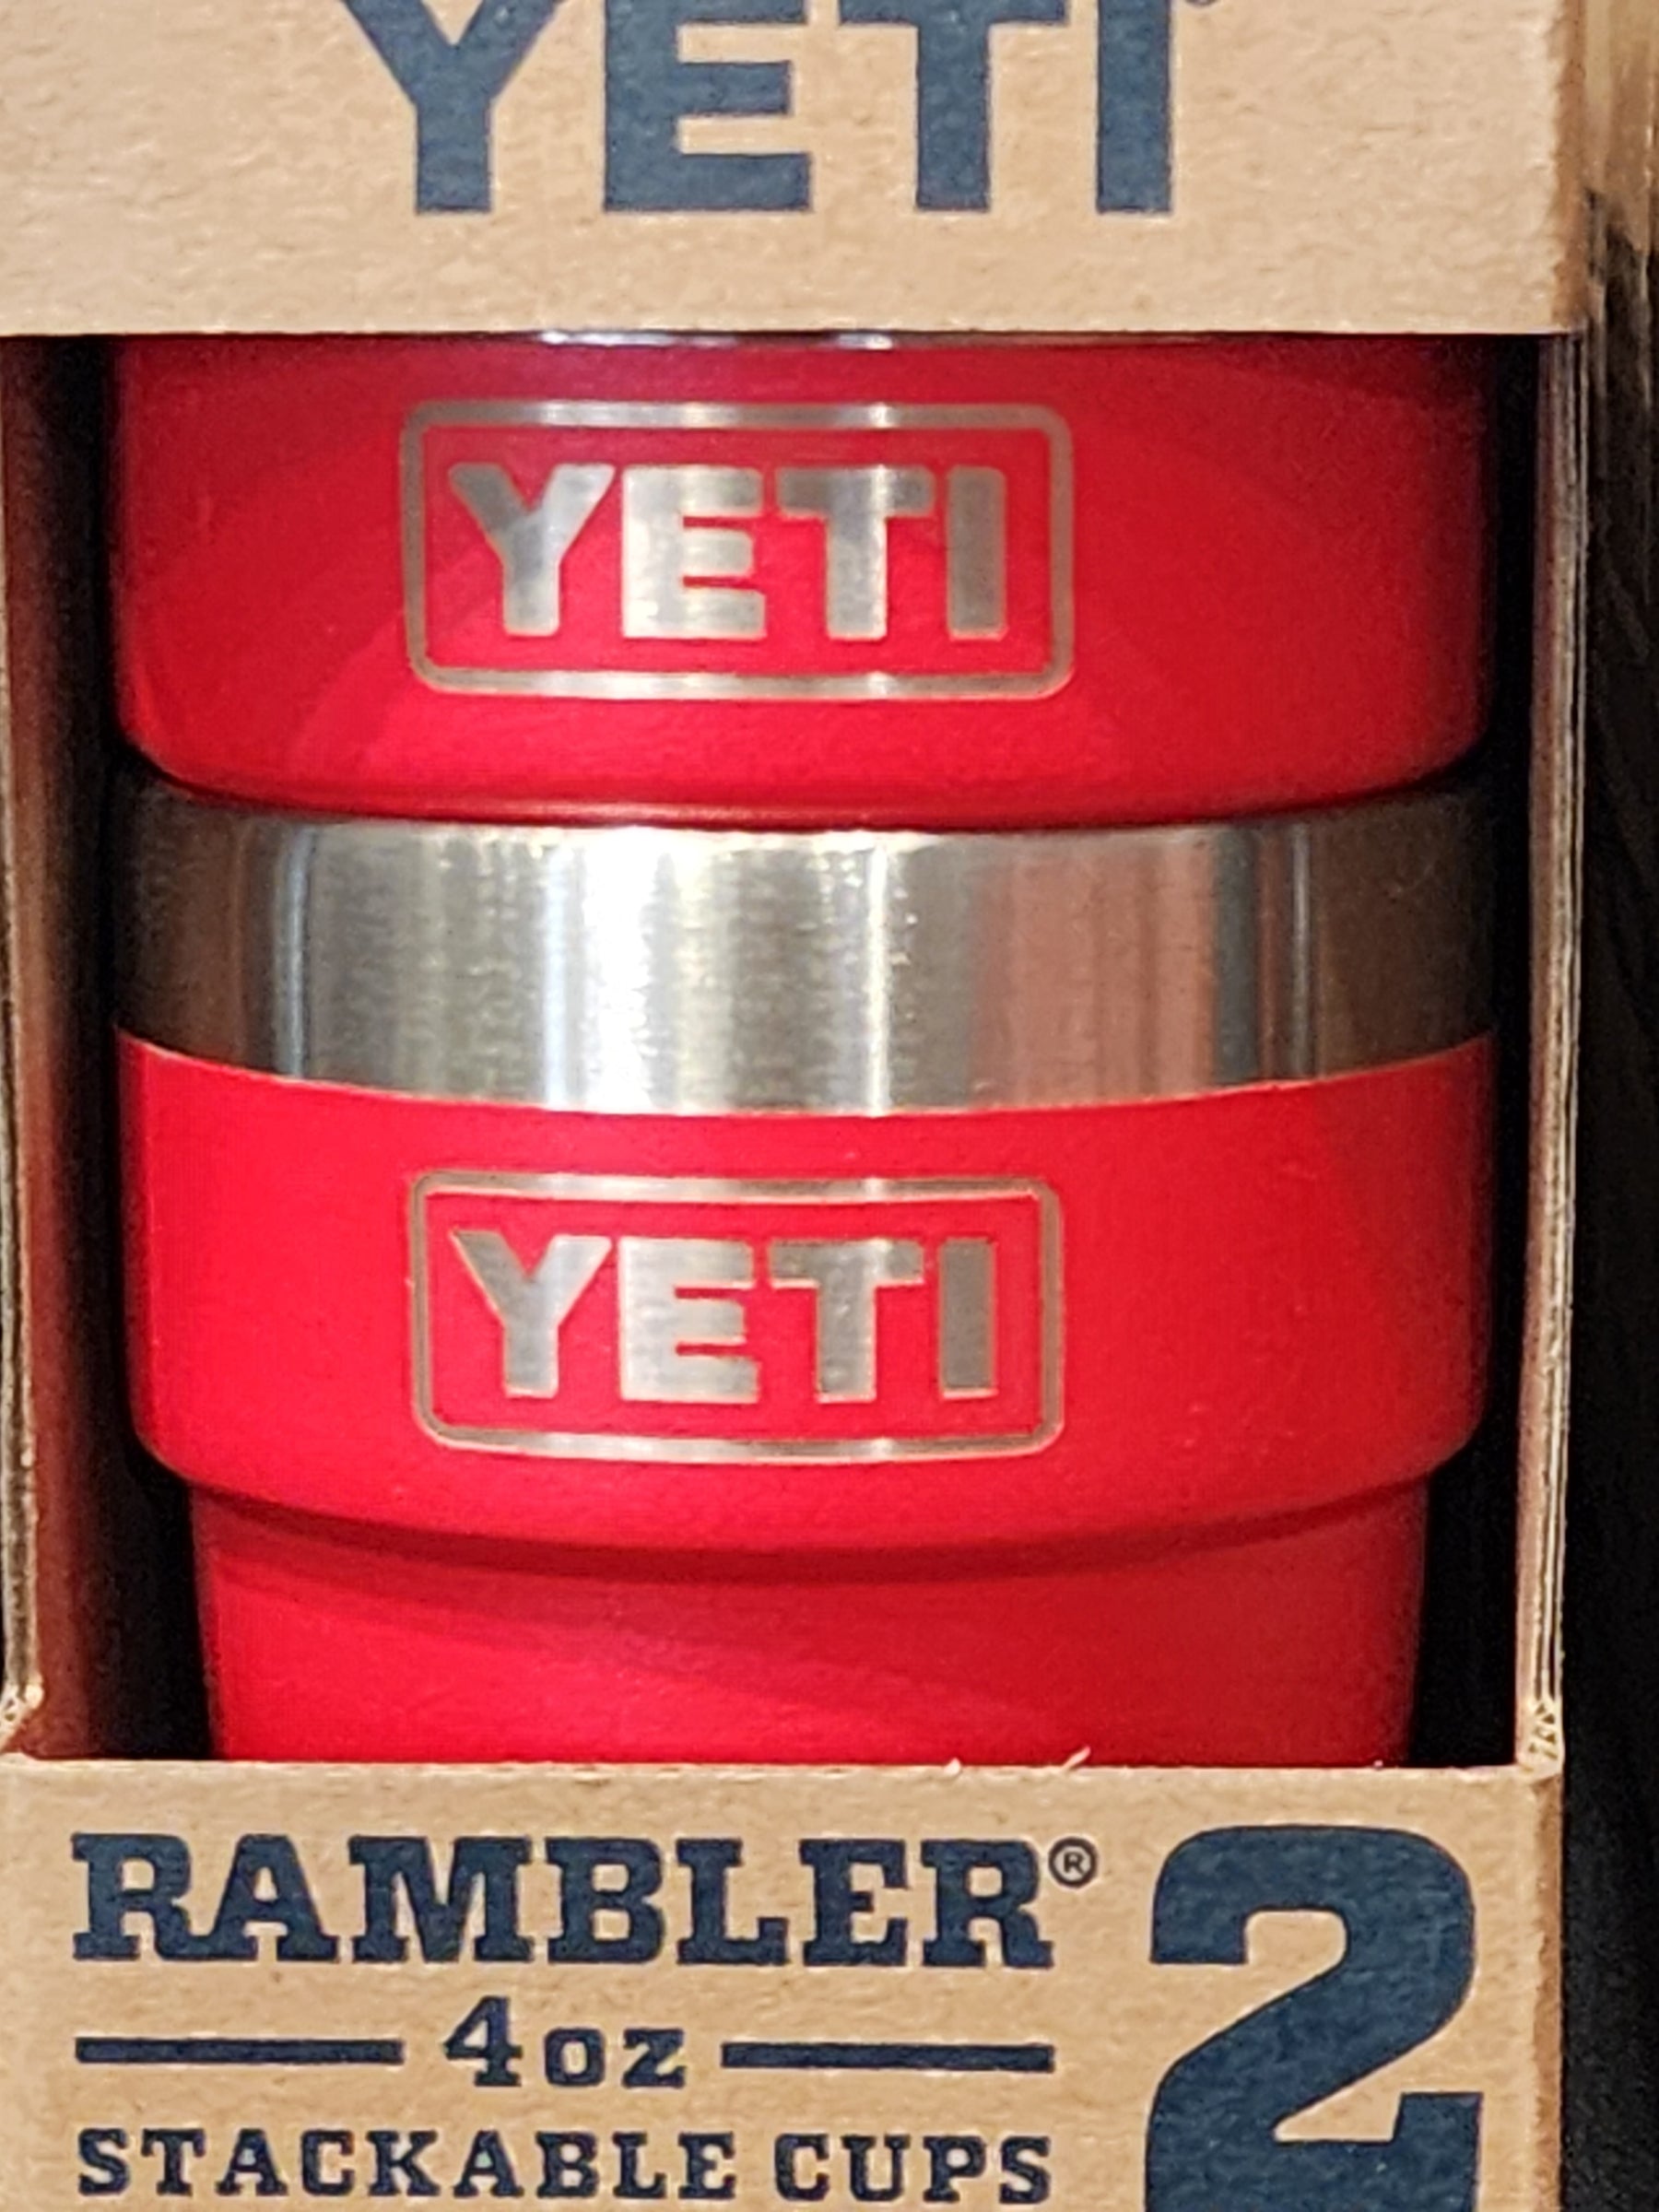 YETI- Rambler 4 oz Stackable Cups 2 pk